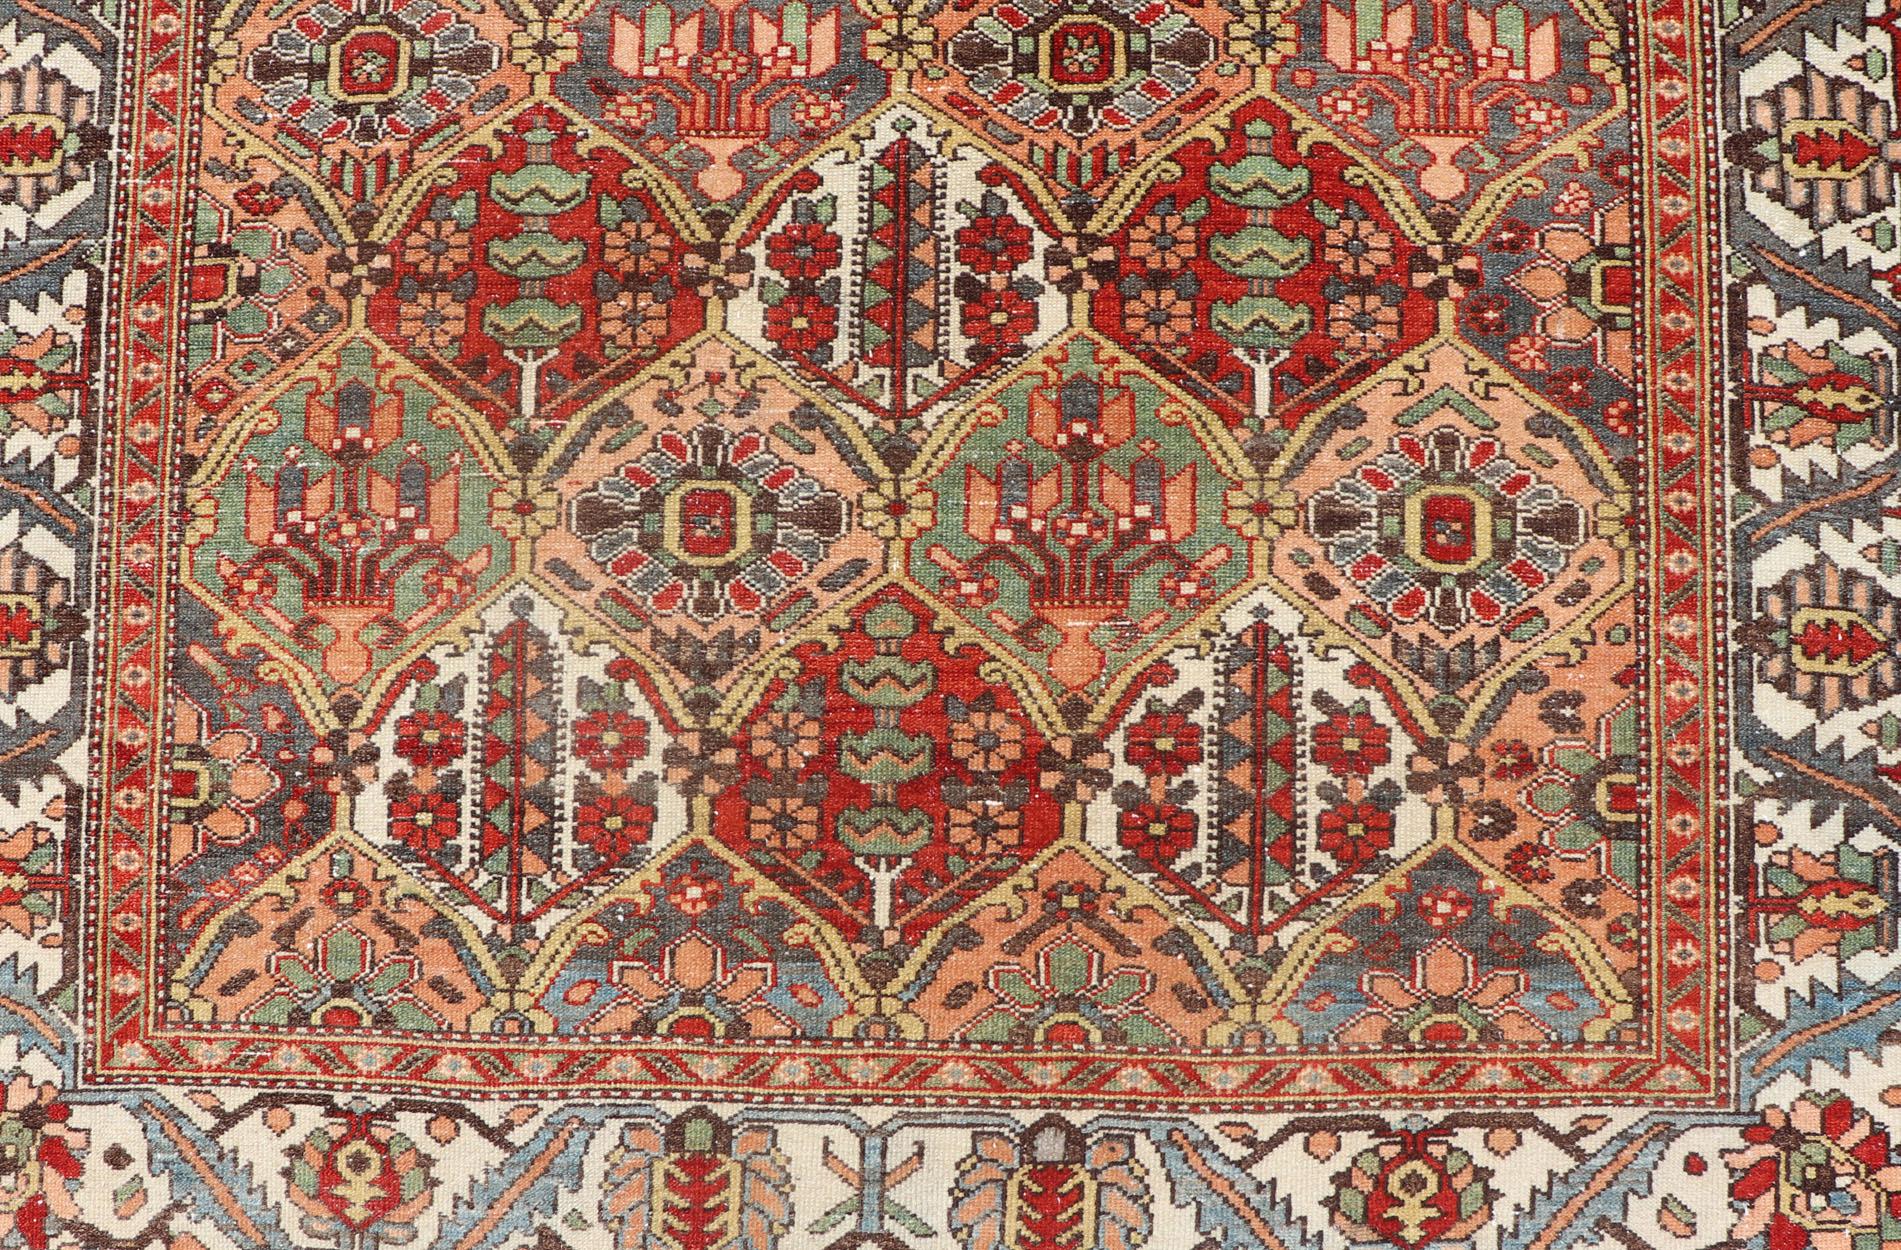 Hand-Knotted Antique Persian Diamond Garden Design Bakhtiari Rug in Multi Colors For Sale